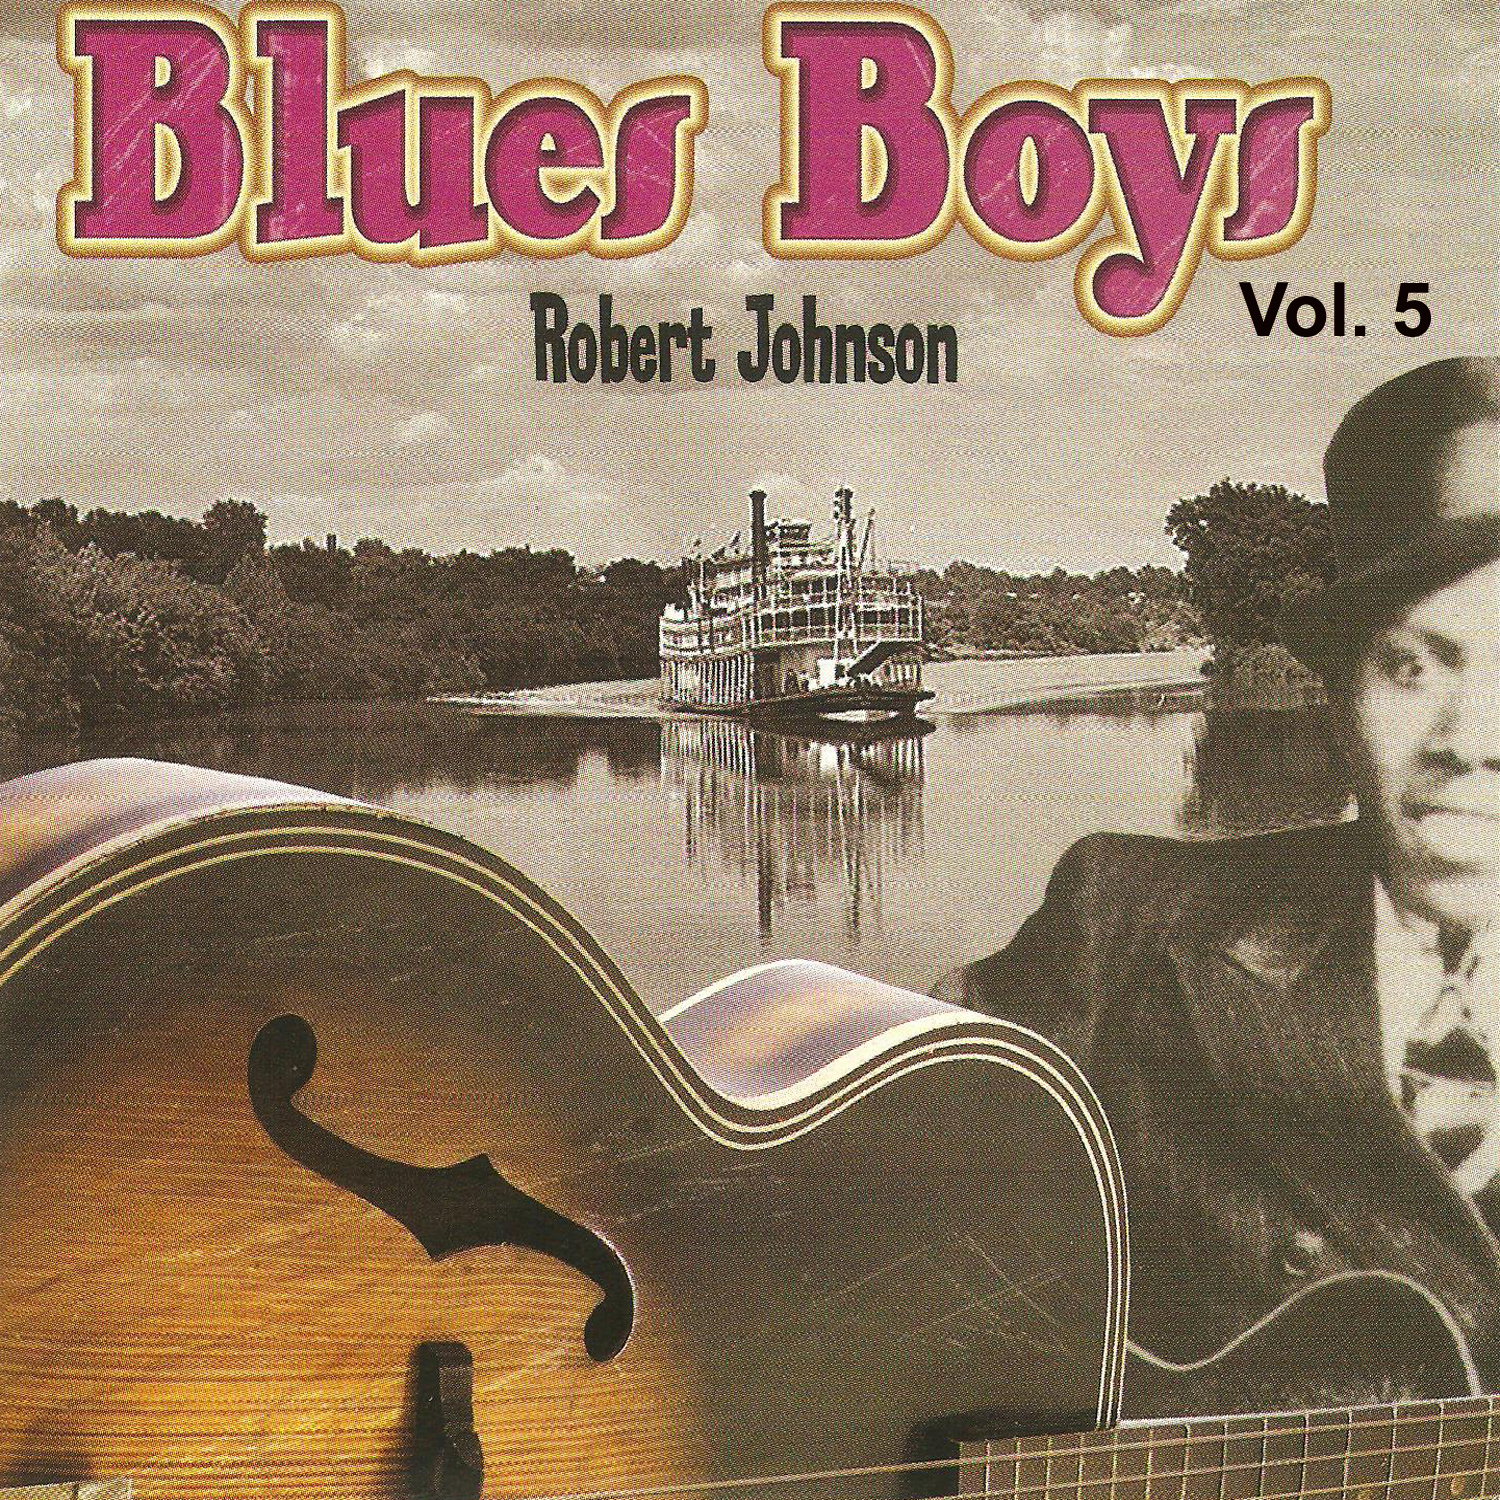 Blues Boys, Vol. 5